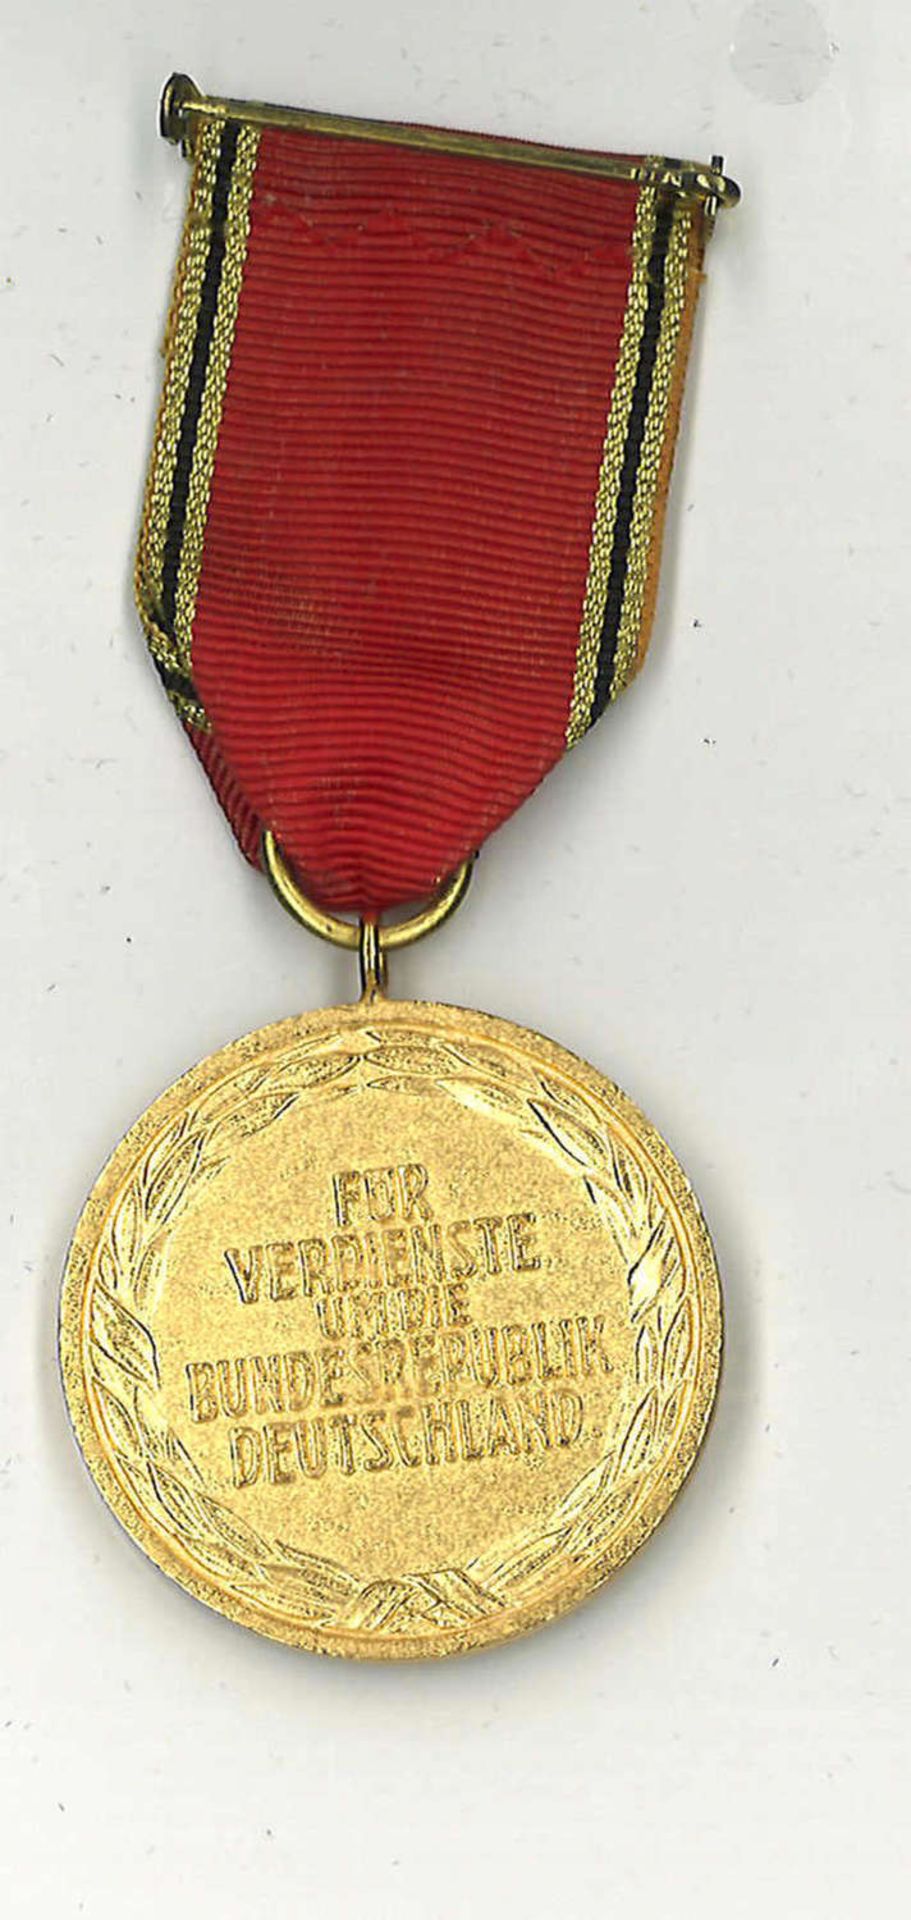 Bundesverdienstkreuz am Bande. Guter ZustandFederal Cross of Merit on ribbon. Good condition - Image 2 of 2